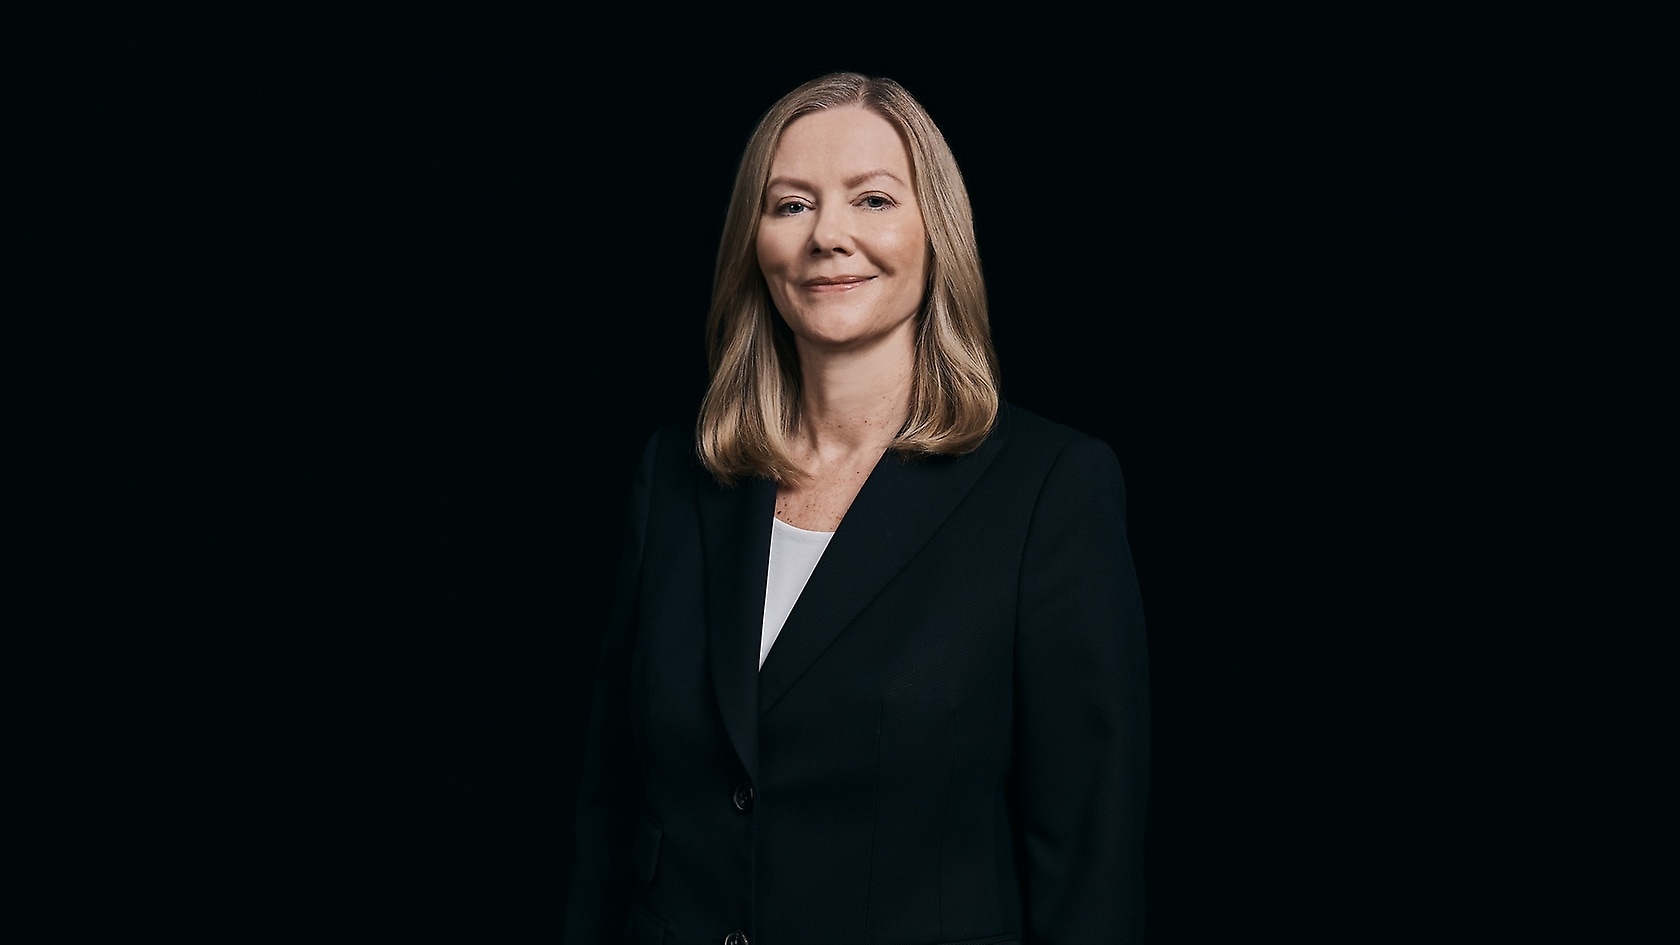 Sabine Kohleisen, Member of the Board of Management of Mercedes-Benz Group AG. HR & Director of Labor Relations.